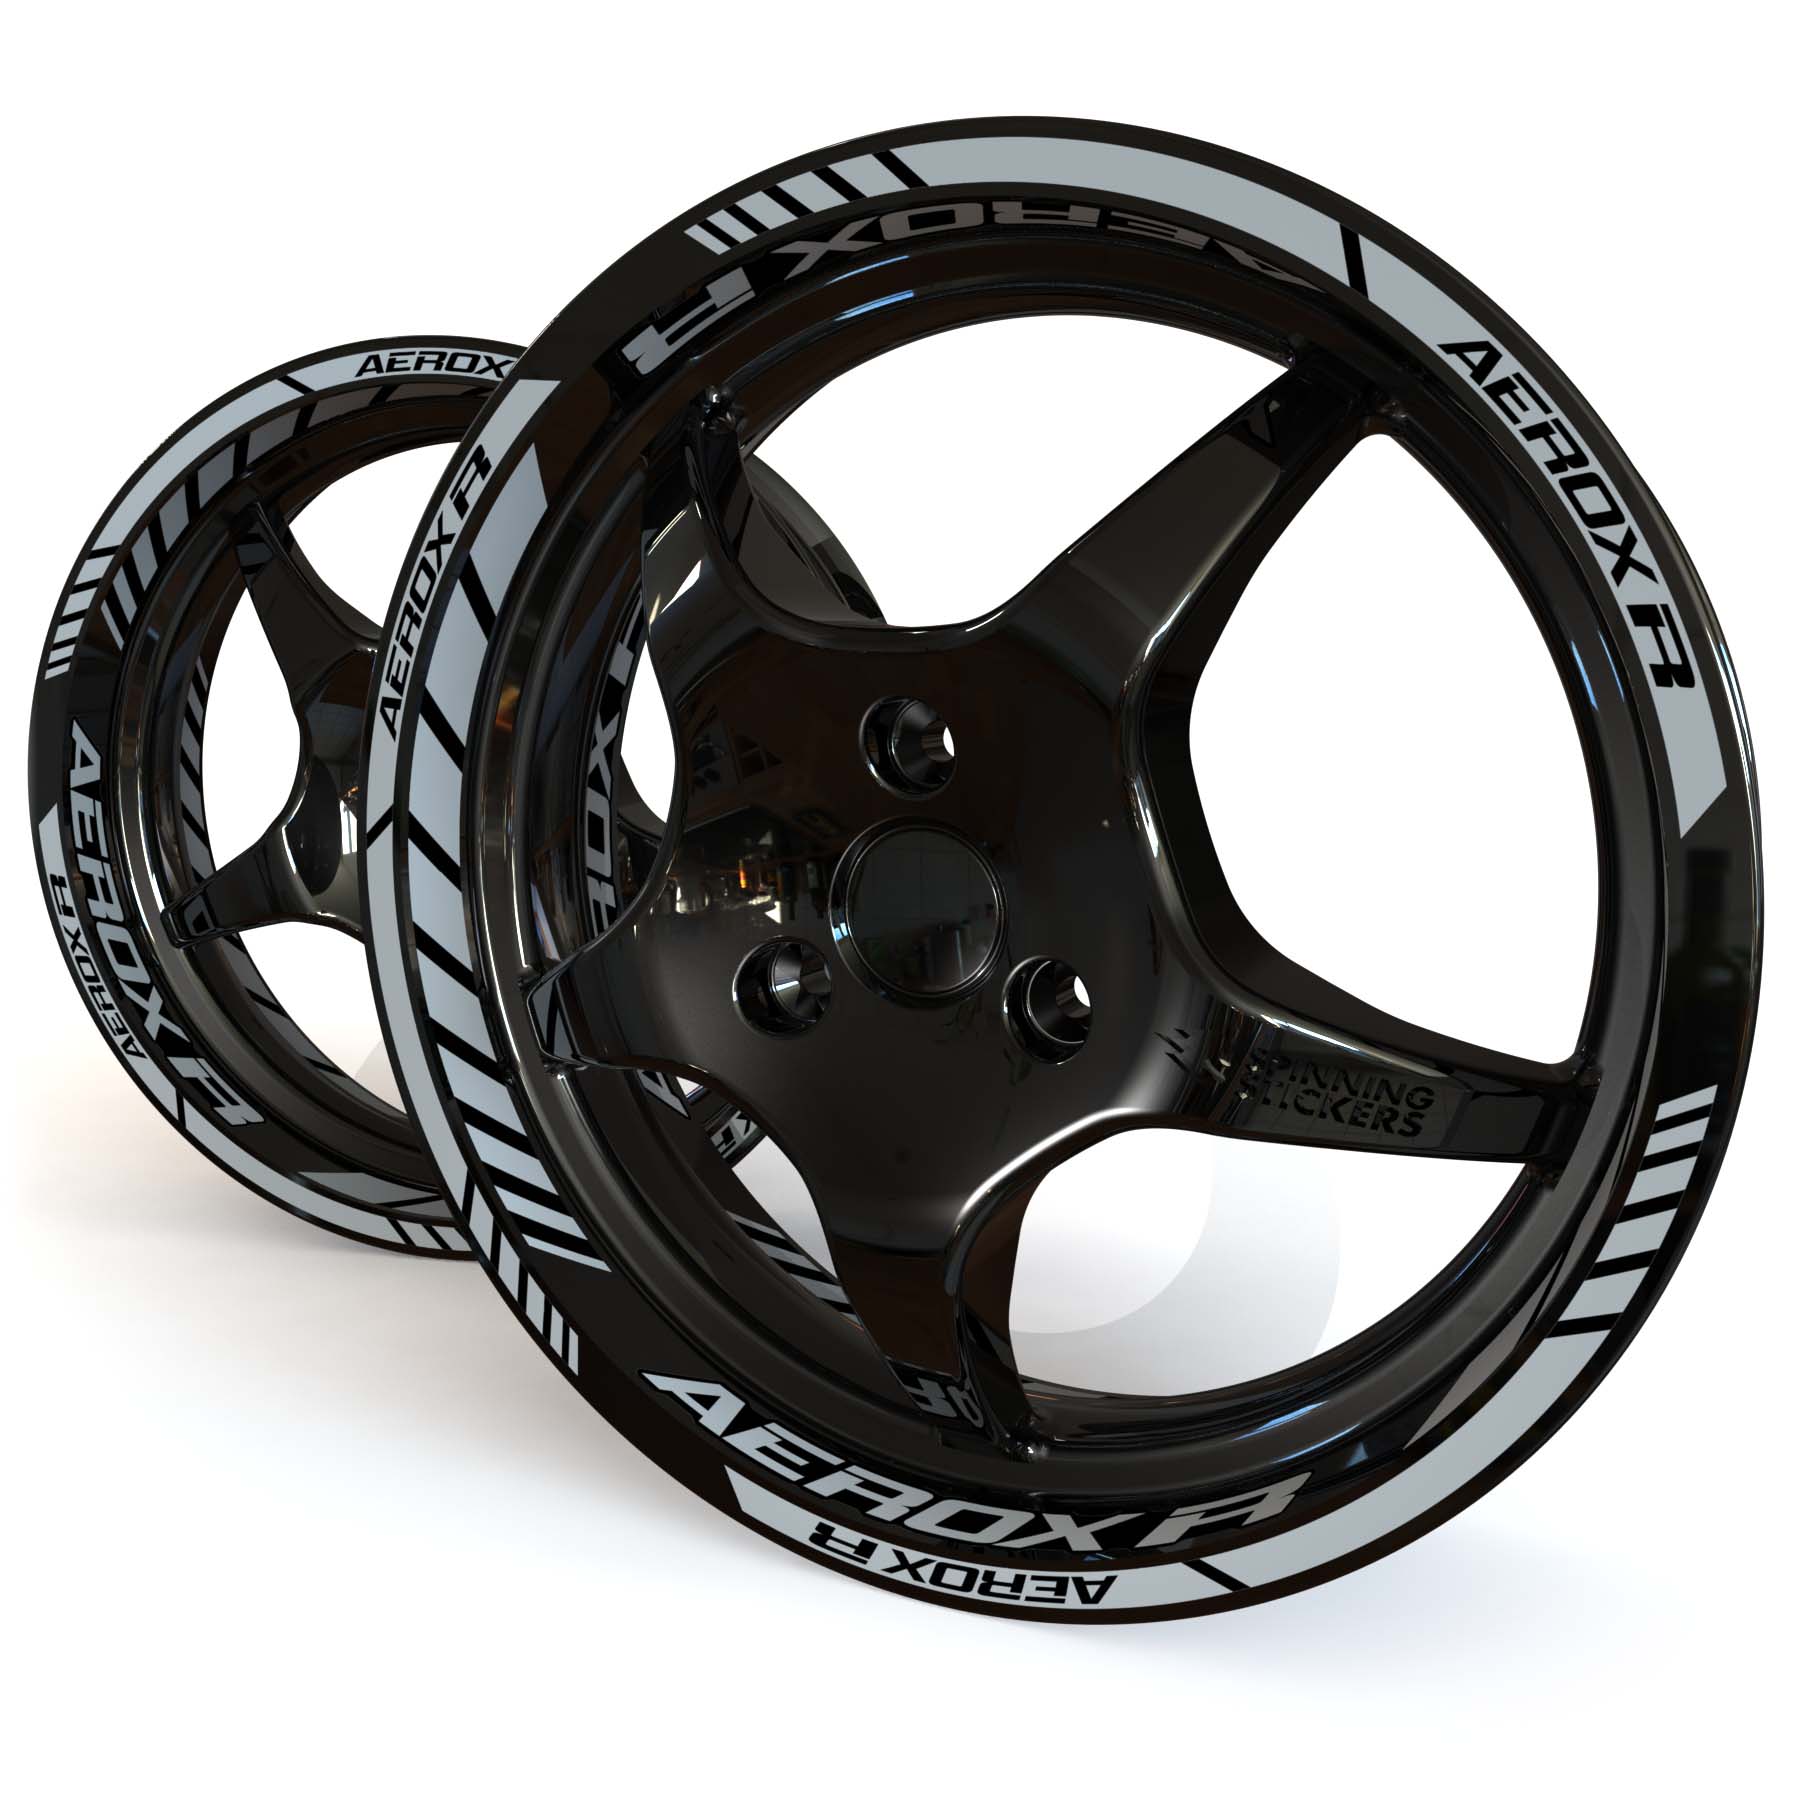 Gray Yamaha Aerox R wheel stickers on a black 12 inch moped rim